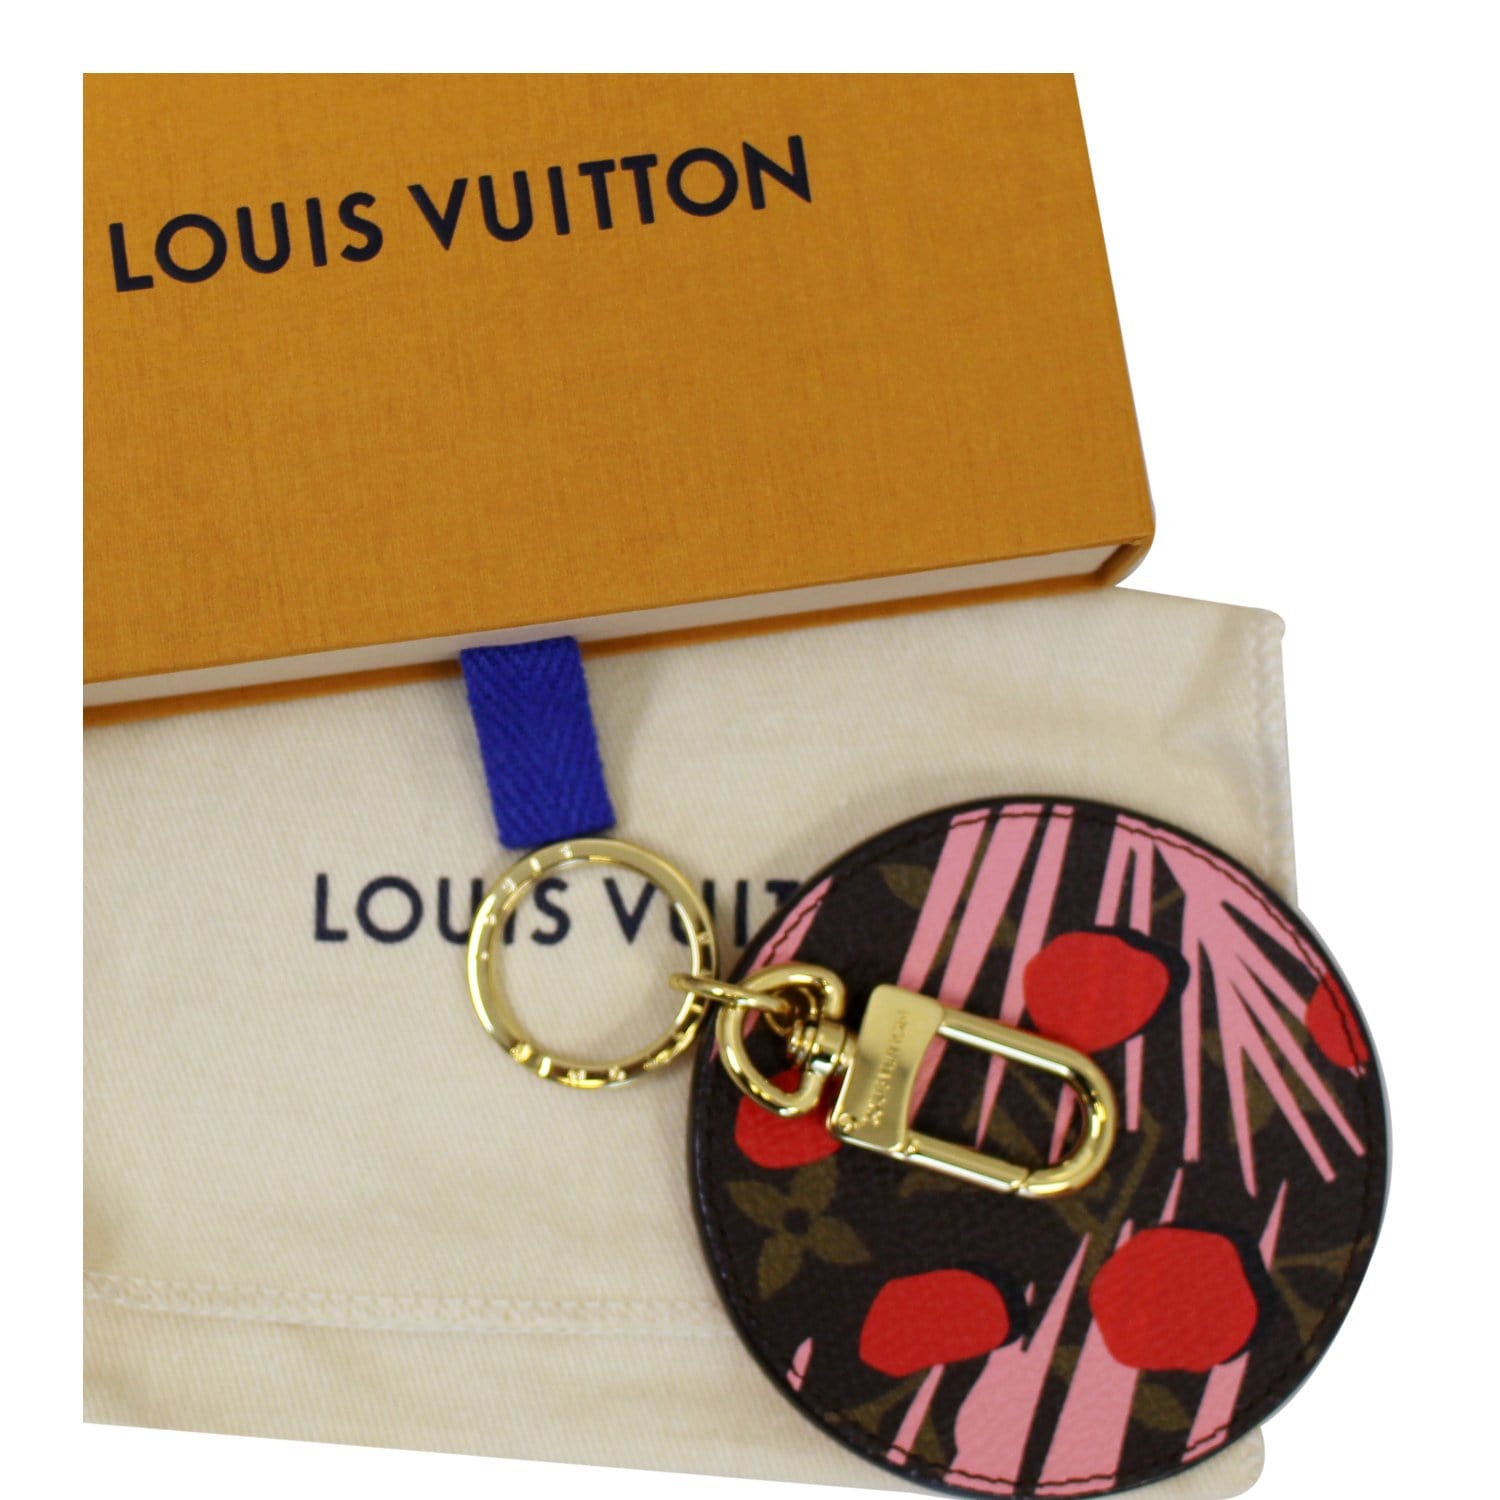 Louis Vuitton bag charm collection 